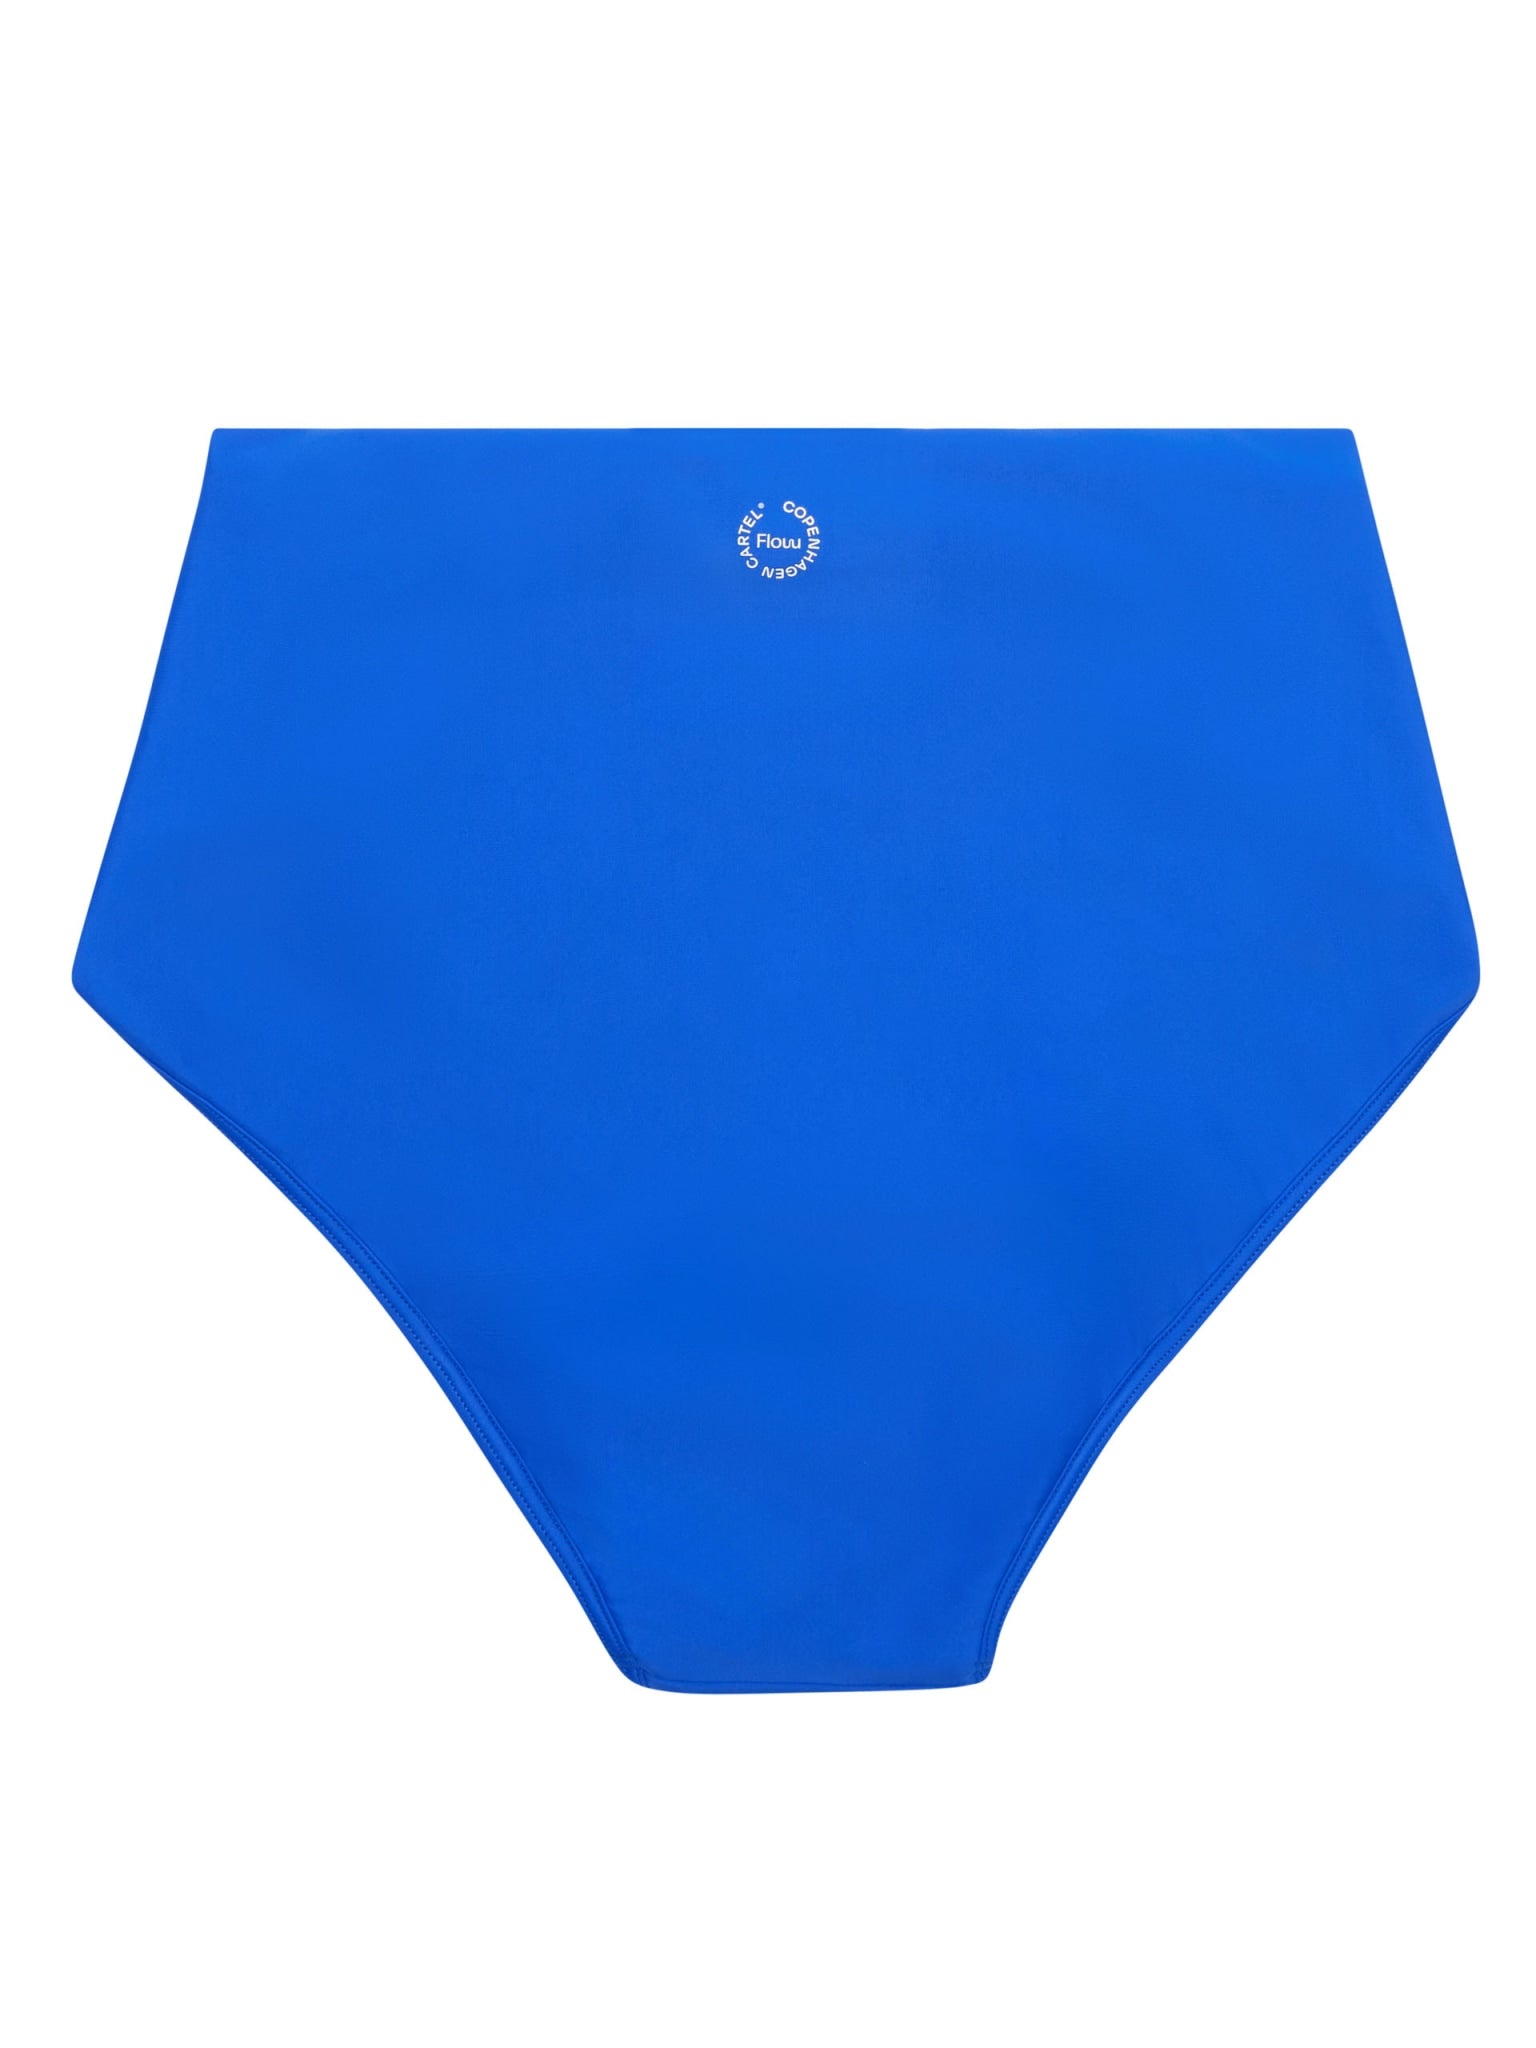 Cartel x Flow period bikini bottom - Cartel Blue